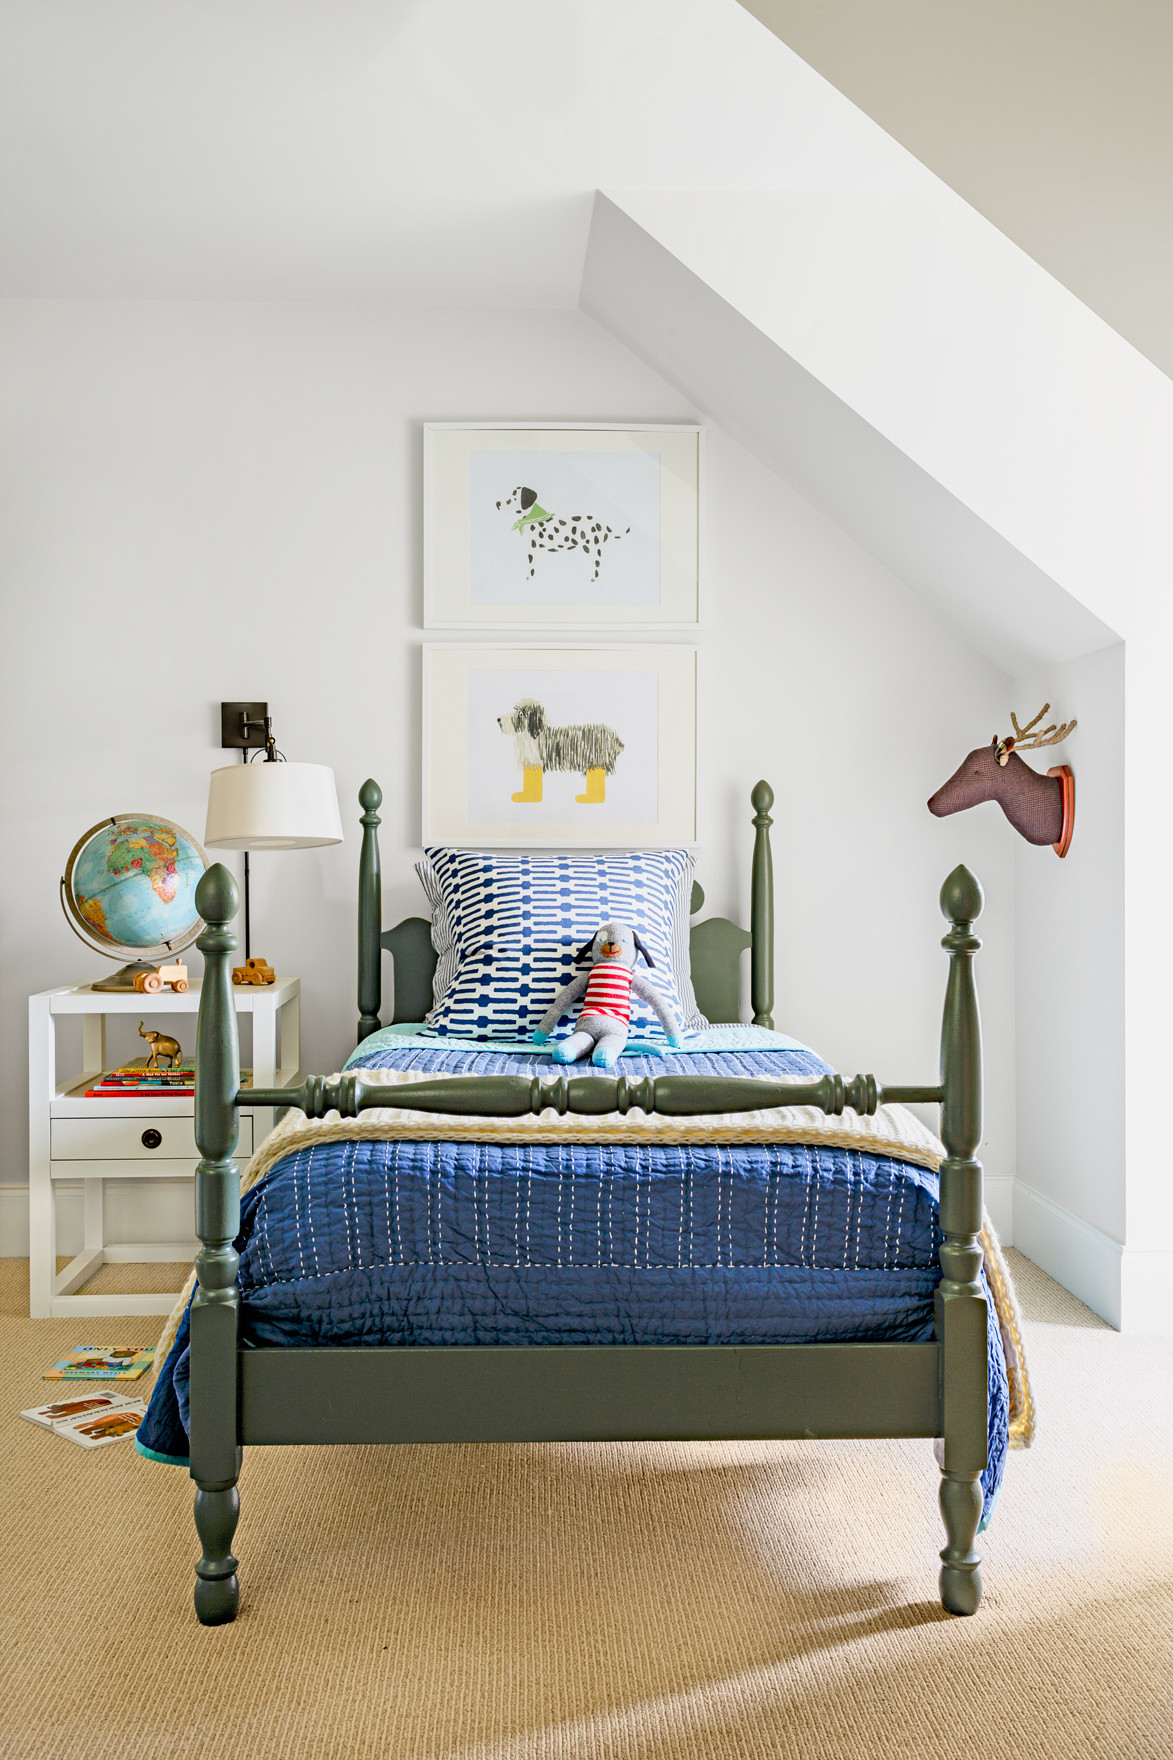 Kids Bedroom Decor
 50 Kids Room Decor Ideas – Bedroom Design and Decorating